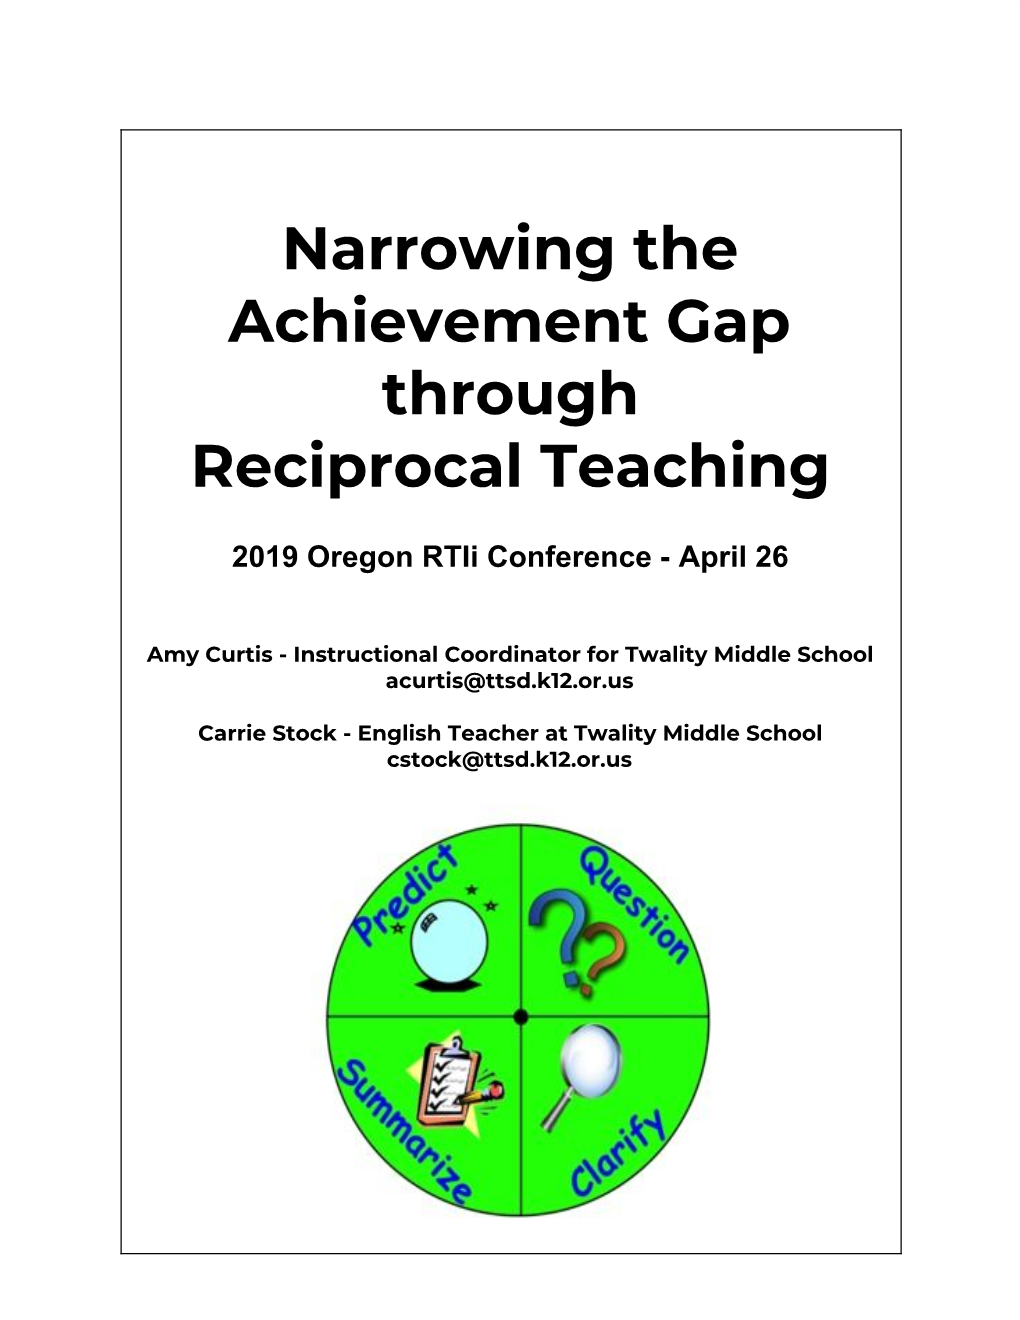 Narrowing the Achievement Gap Through Reciprocal Teaching